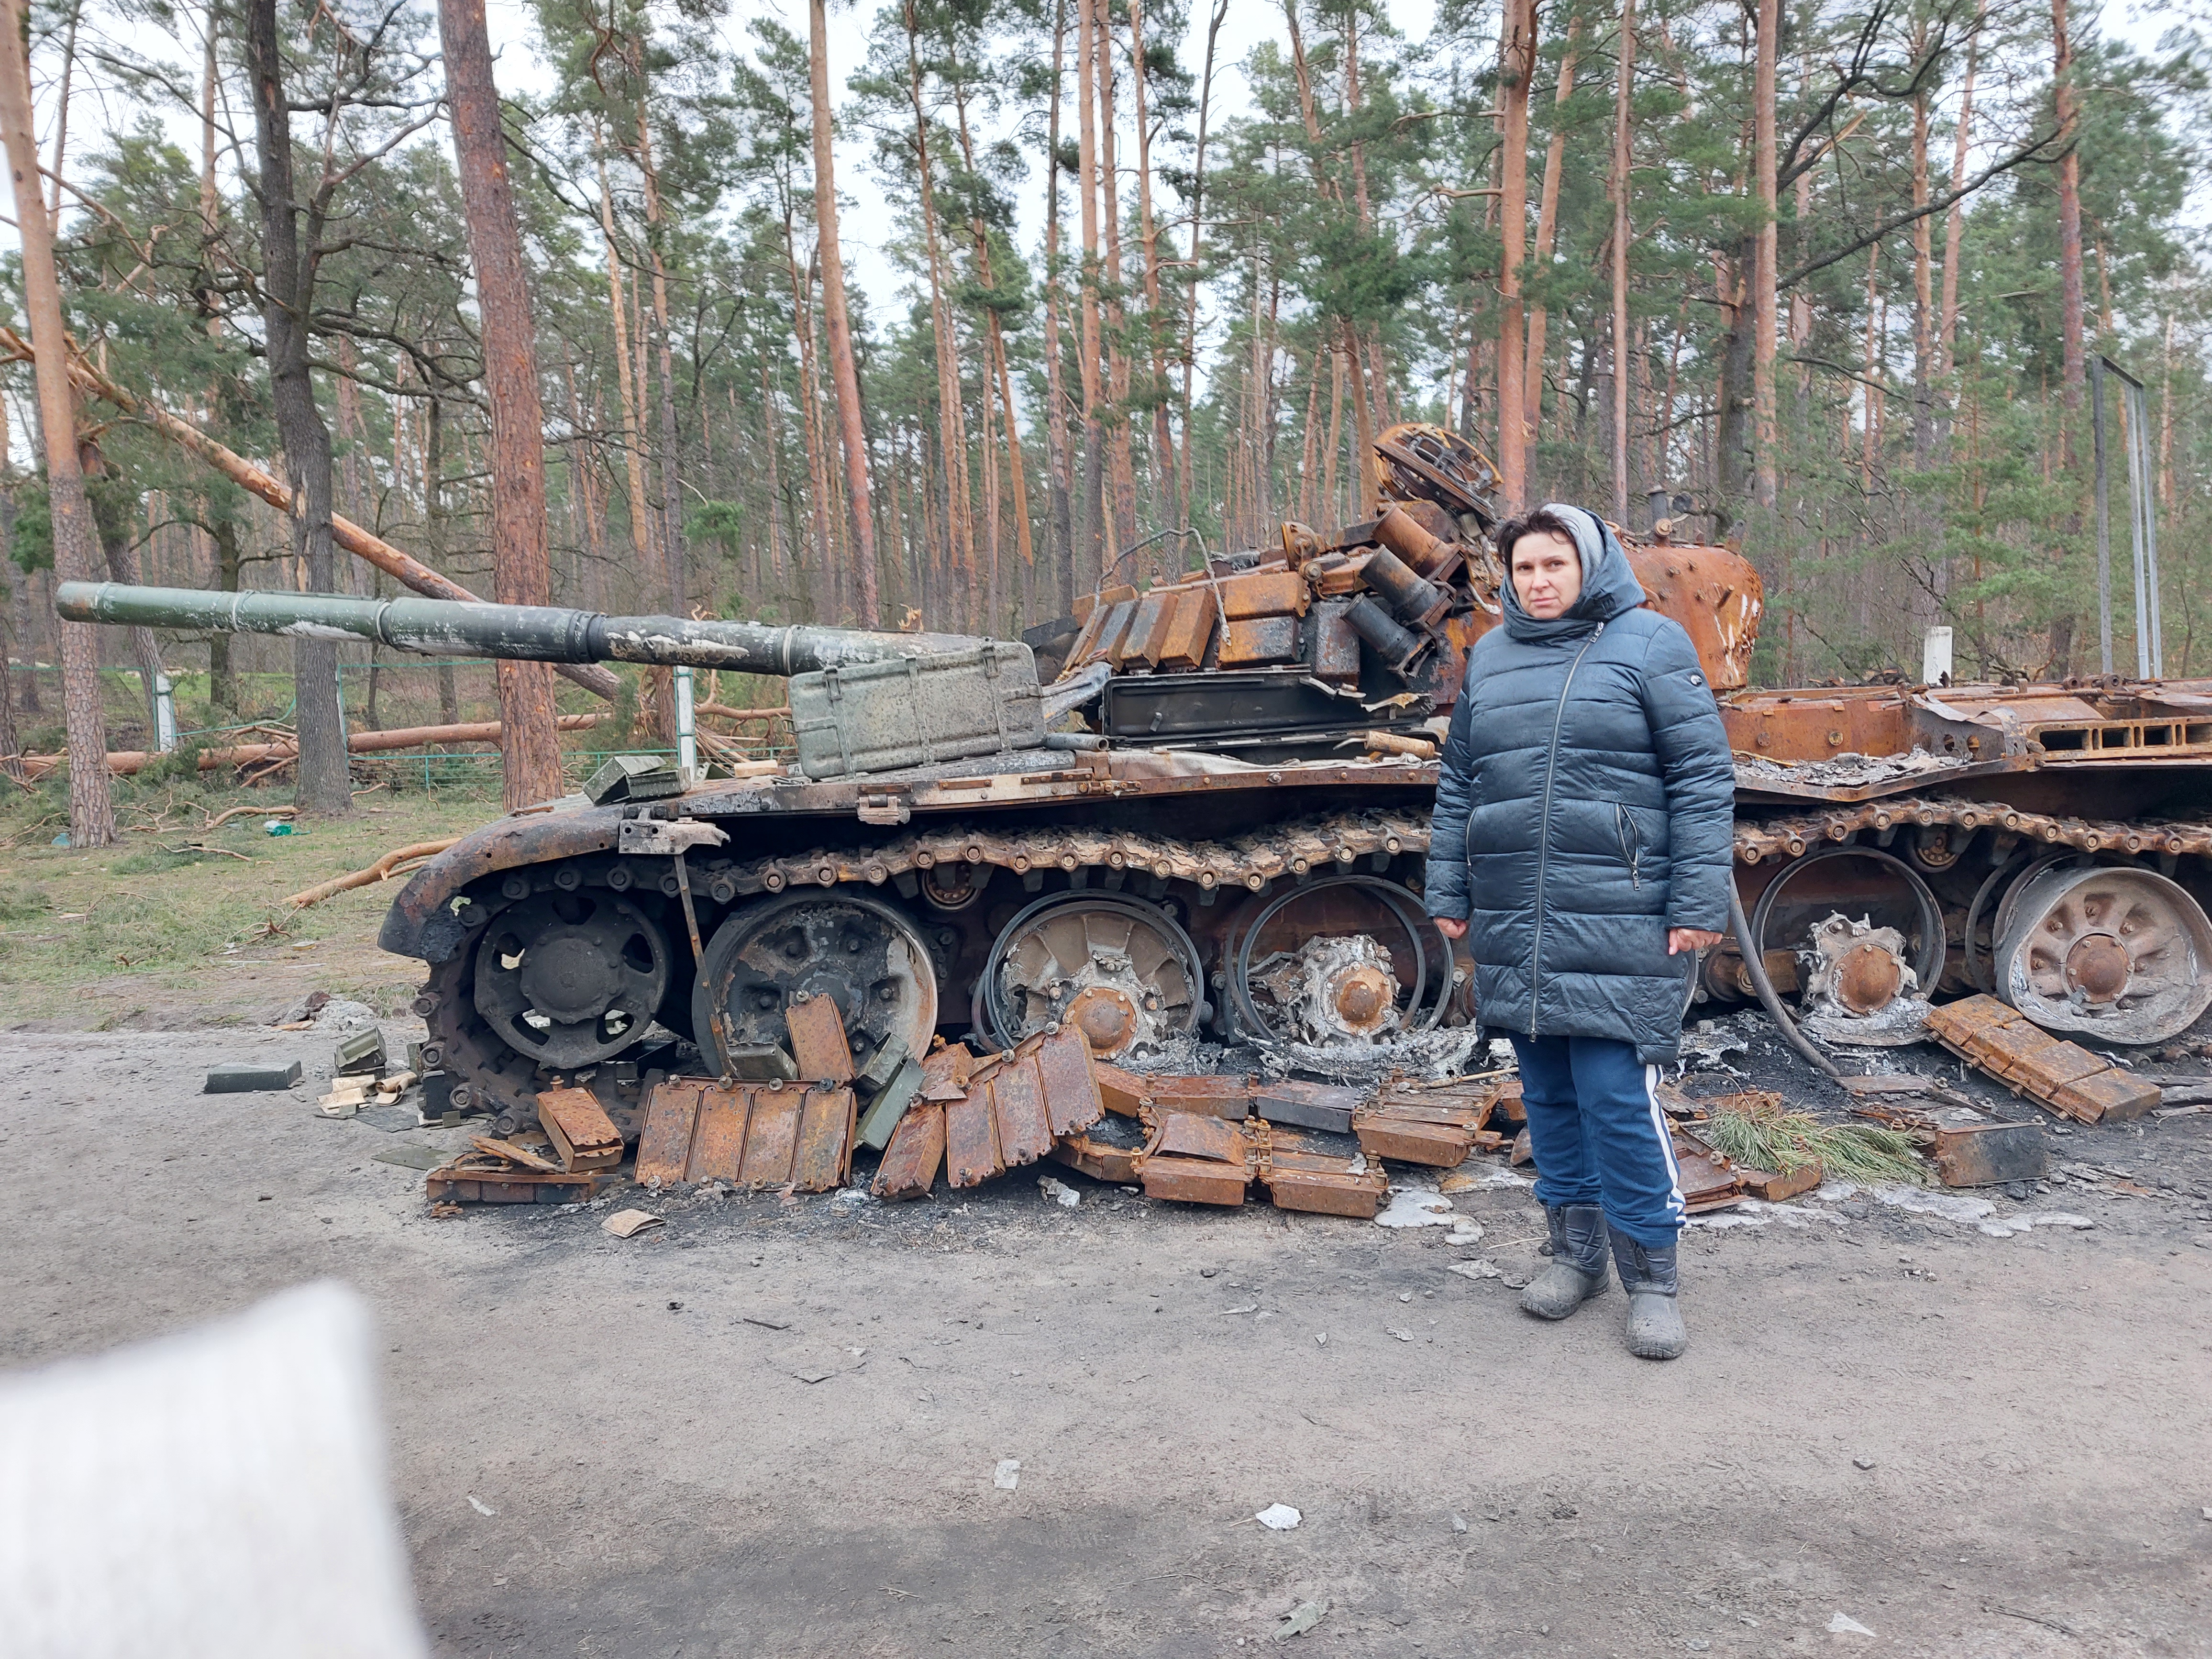 Roman Moskalenkos mother standing in front of a destroyed tank on her street in Ukraine